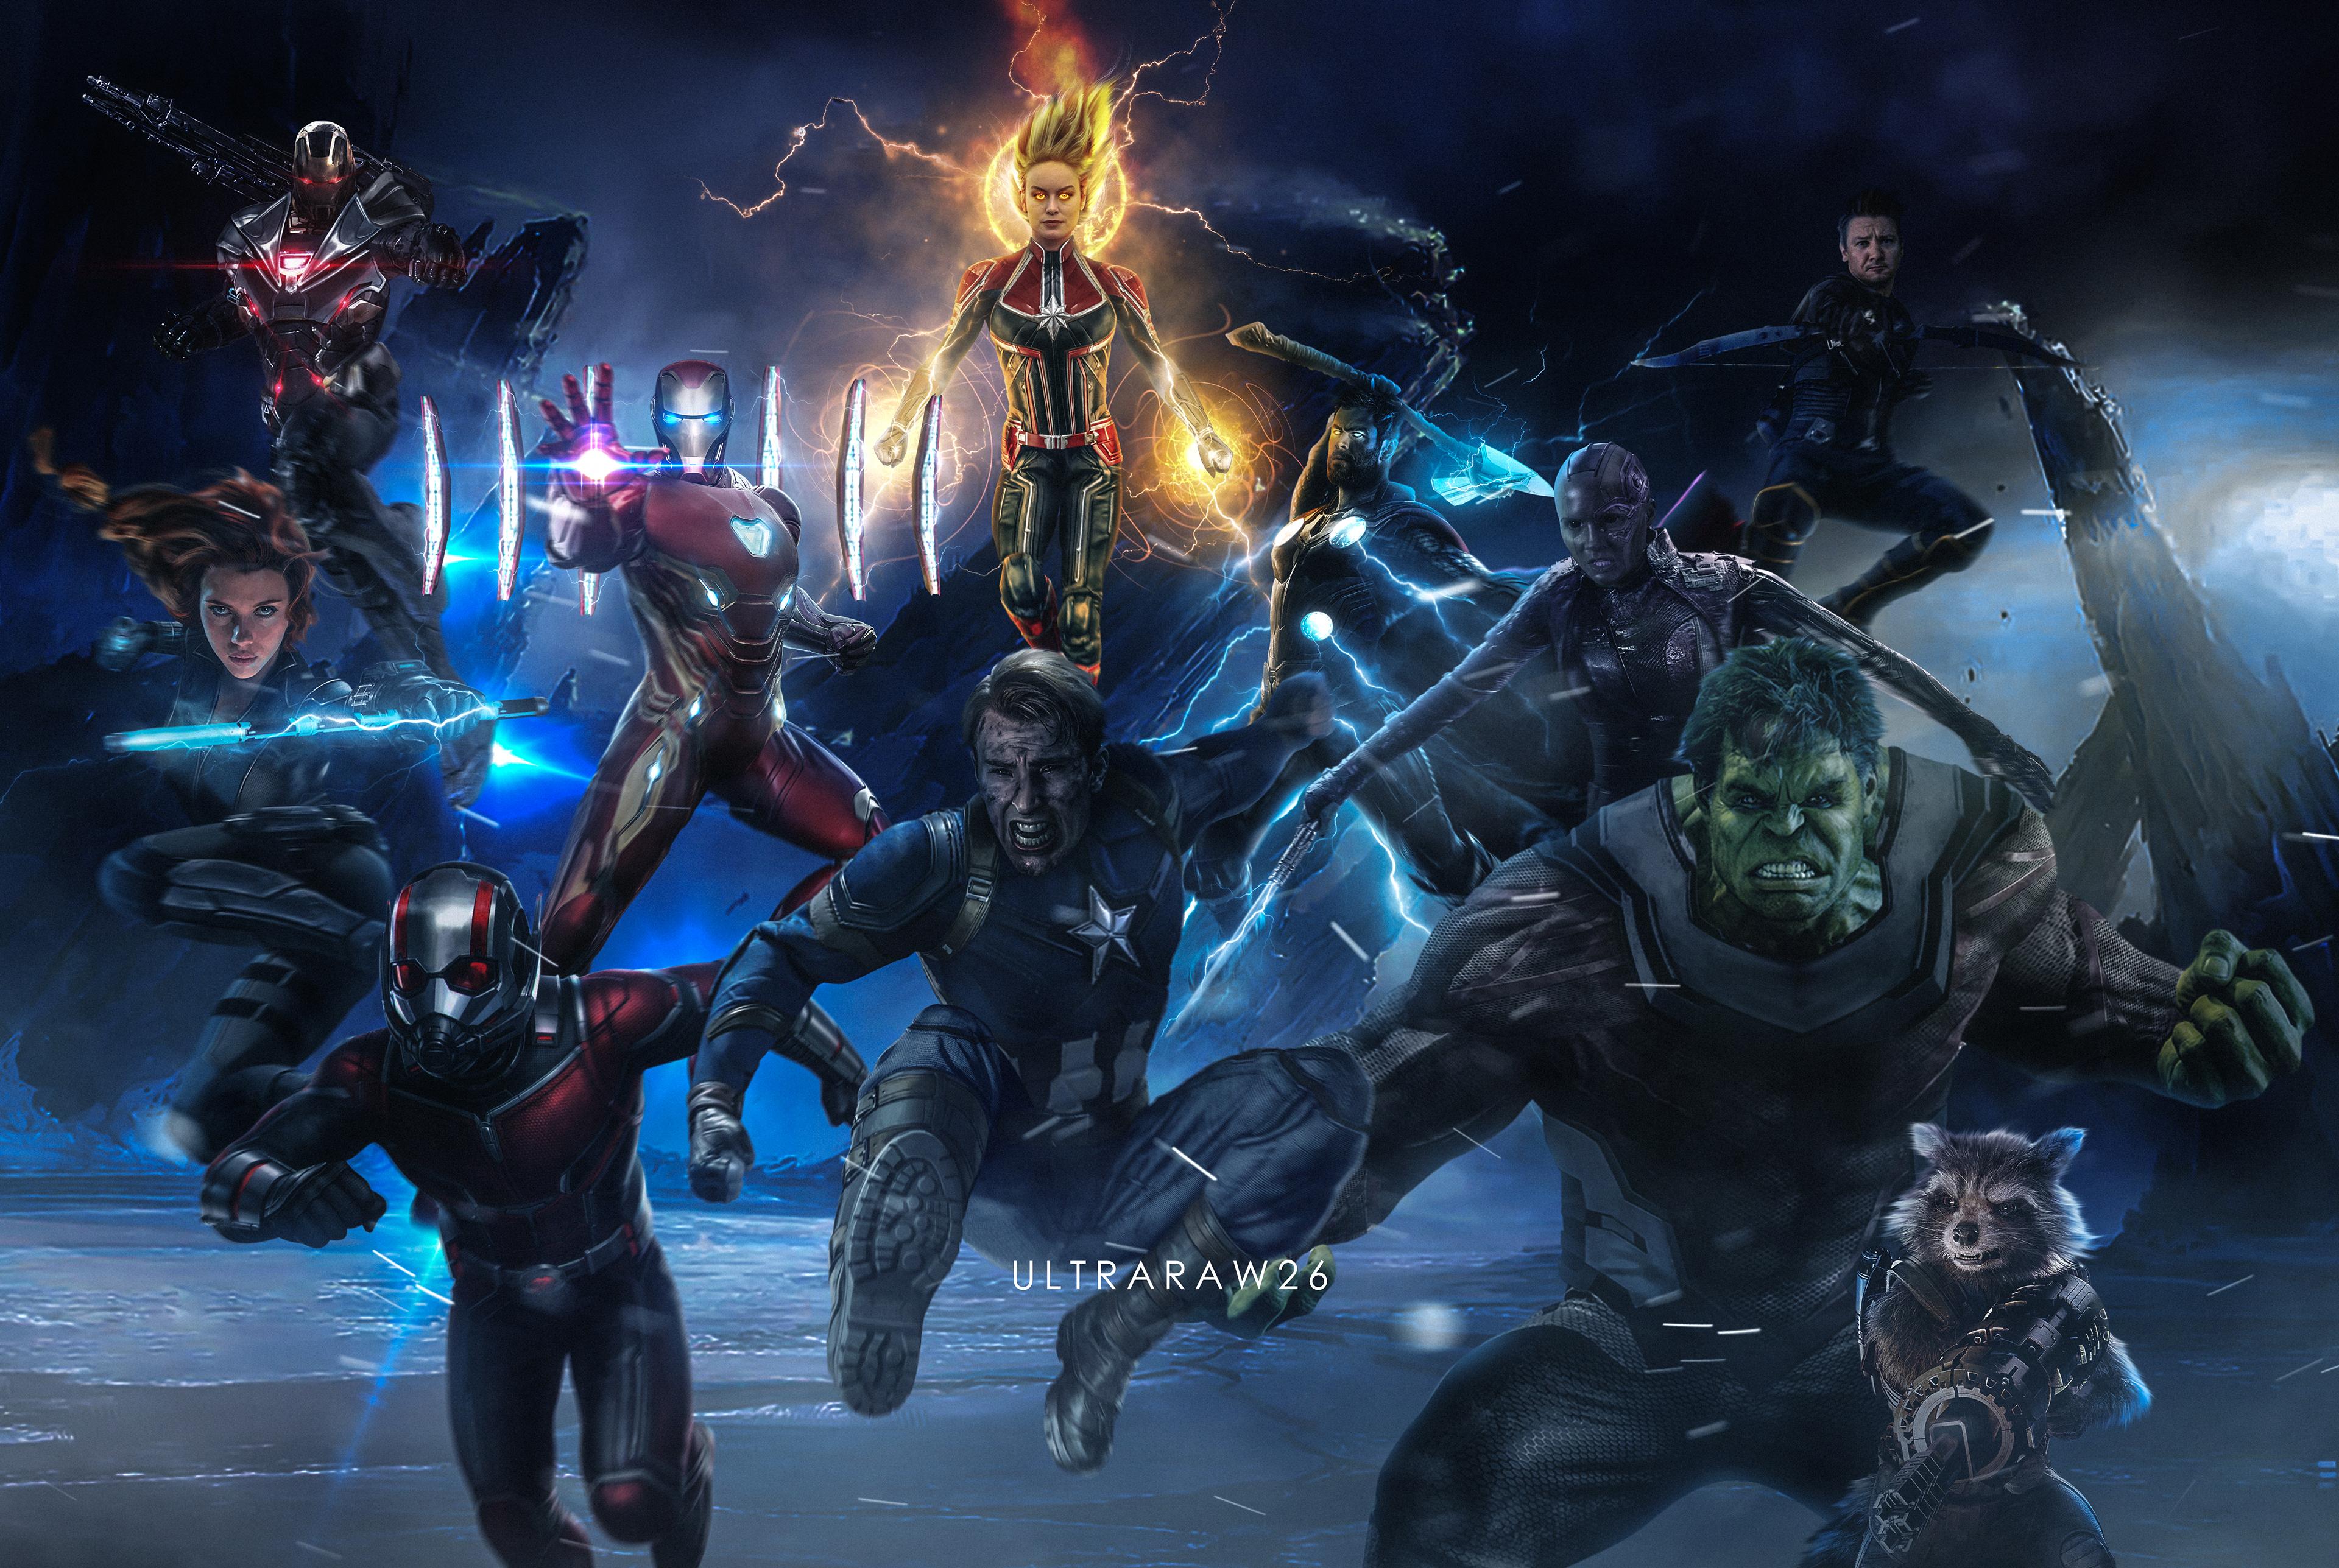 Avengers EndGame, Iron Man, Thor, Hulk, Black Widow